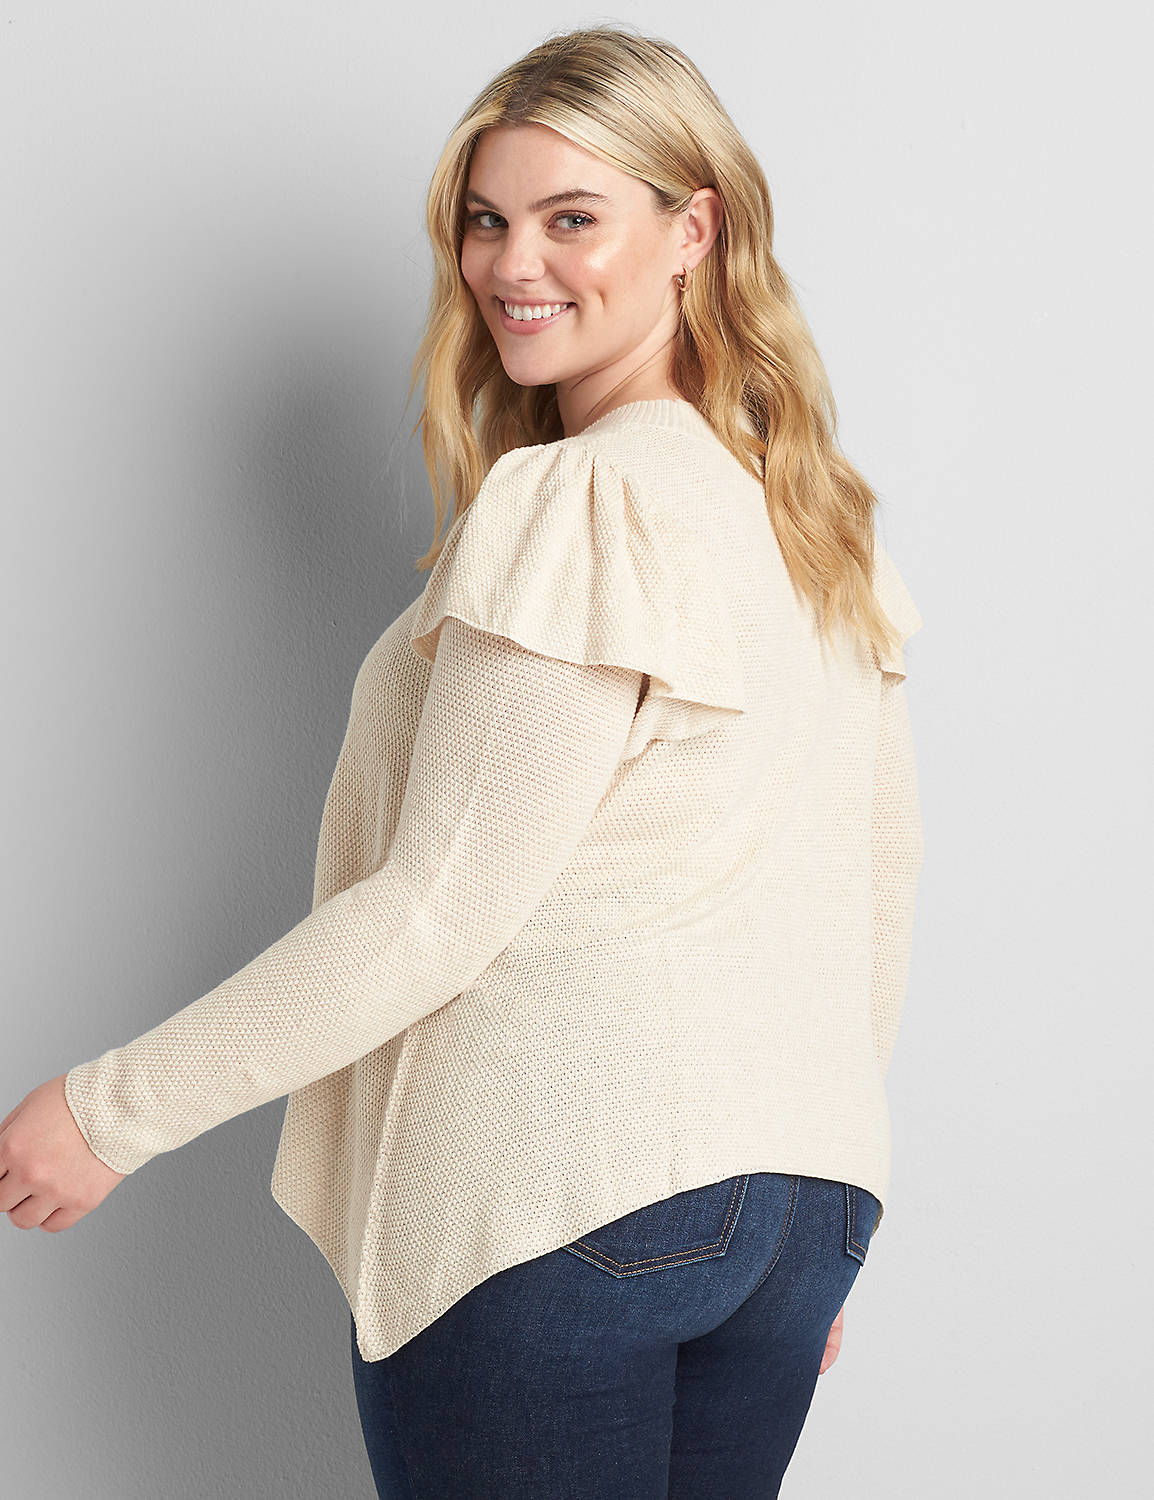 Long Ruffle-Sleeve Sweater Product Image 2